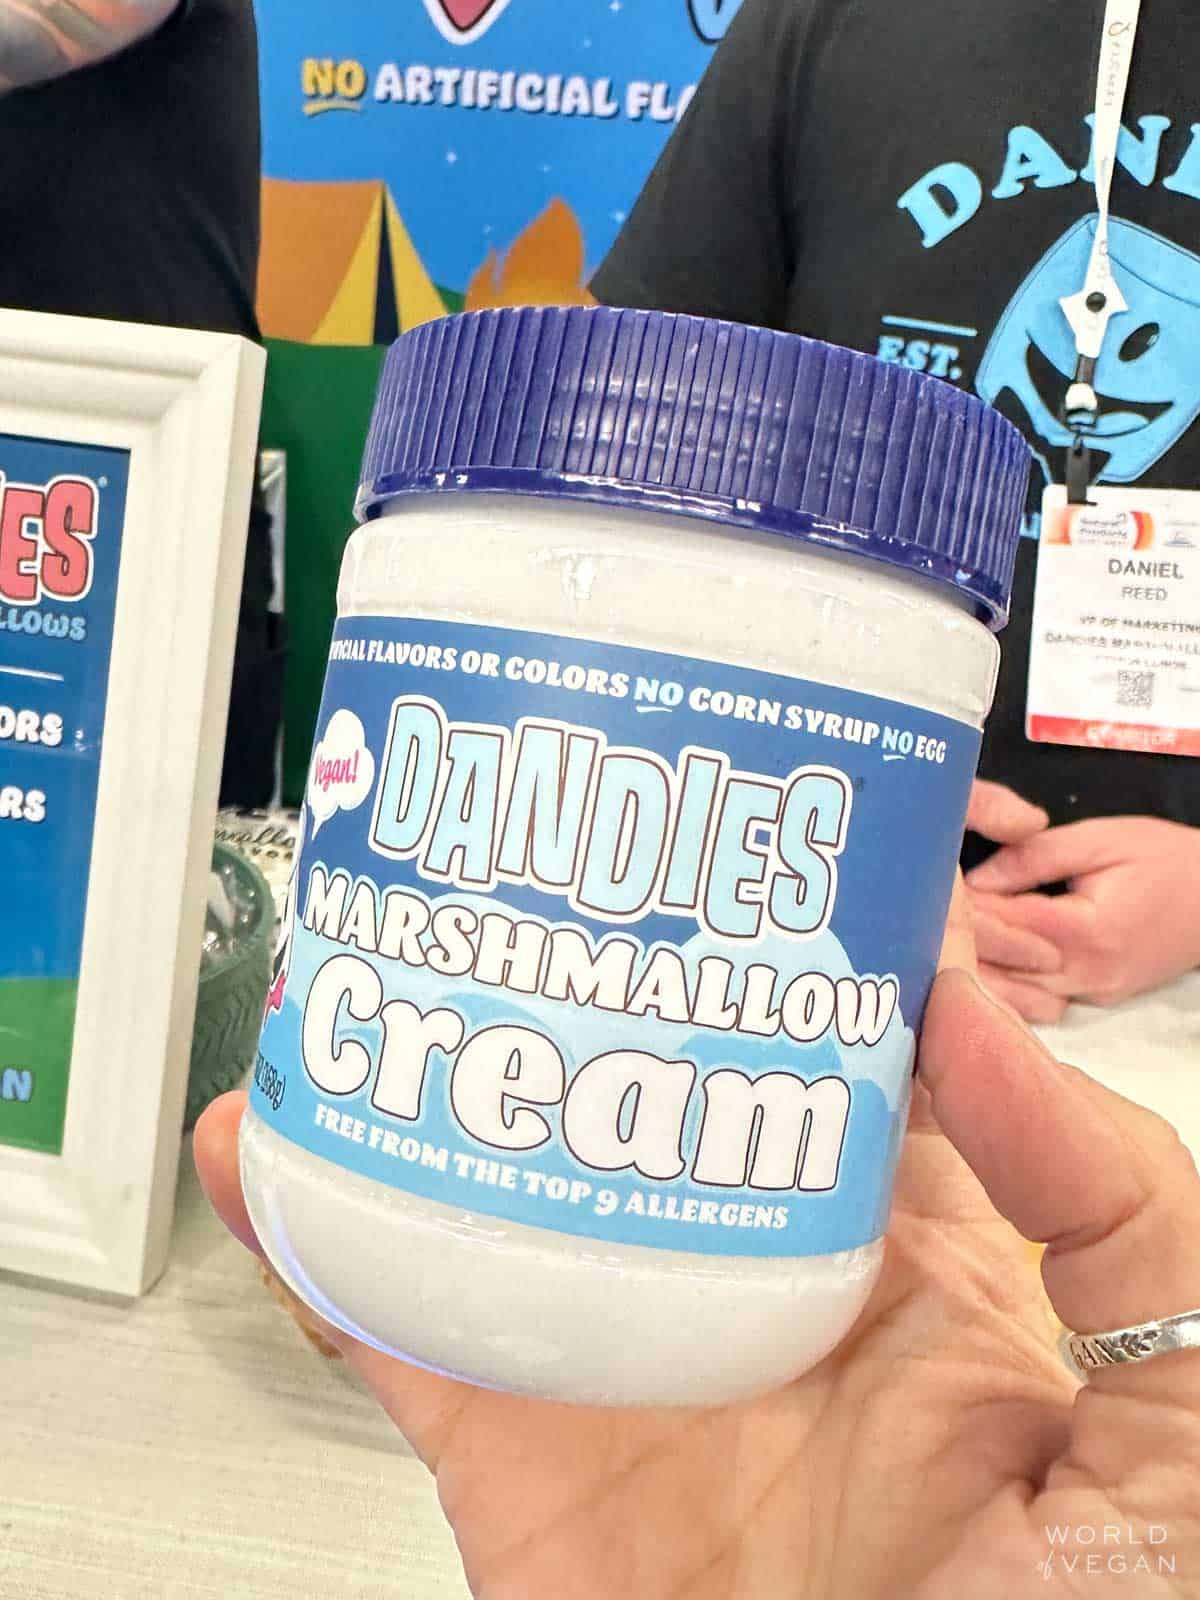 A jar of Dandies brand vegan marshmallow cream.